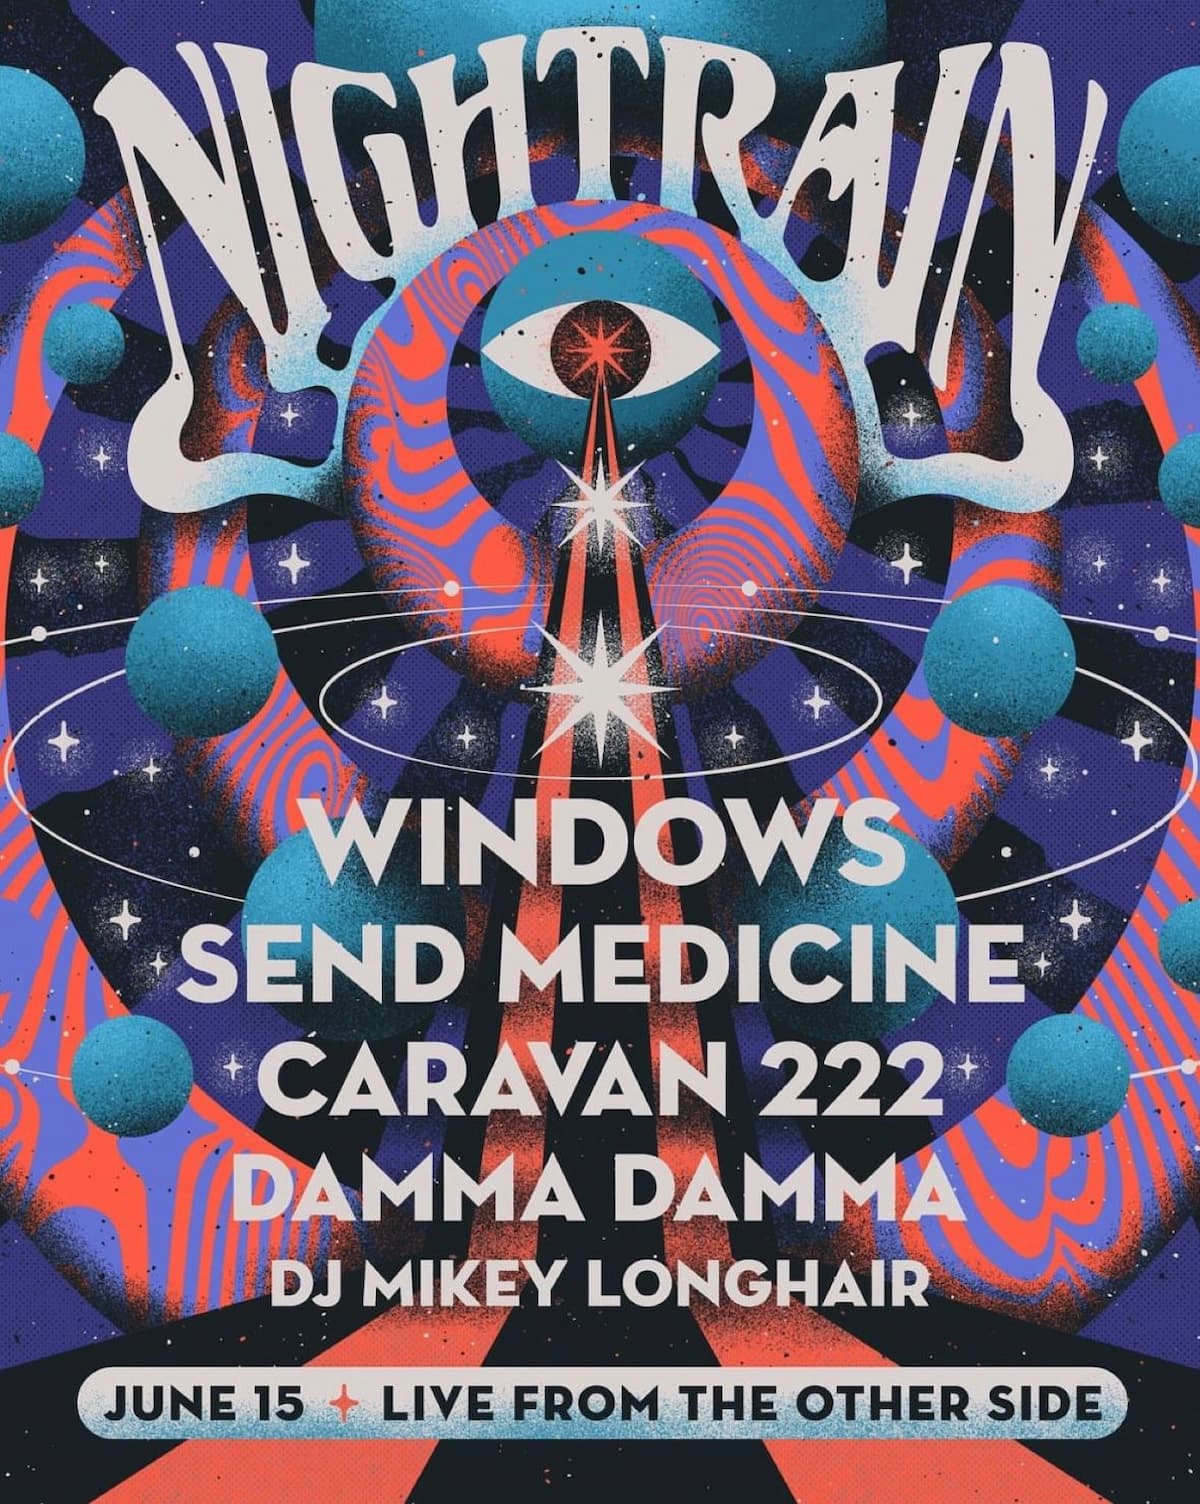 Windows / Send Medicine / Caravan 222 / Damma Damma 